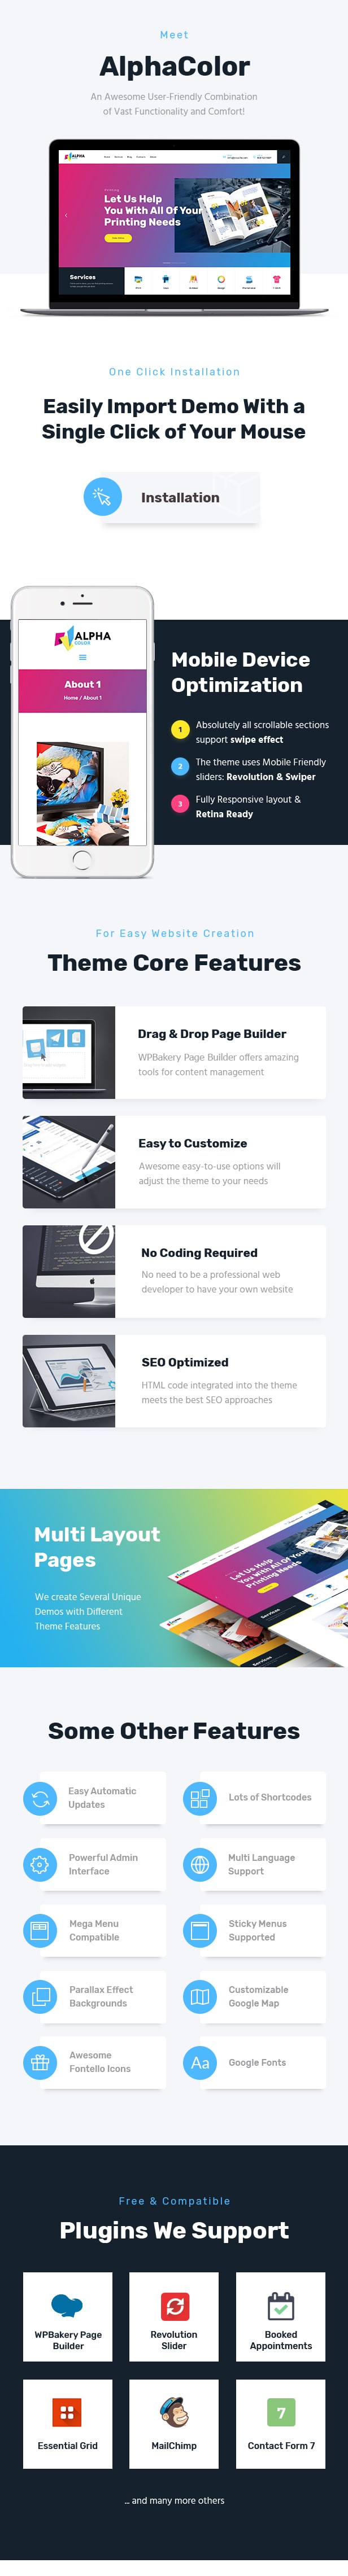 AlphaColor | Type Design & Printing Services WordPress Theme + Elementor - 1